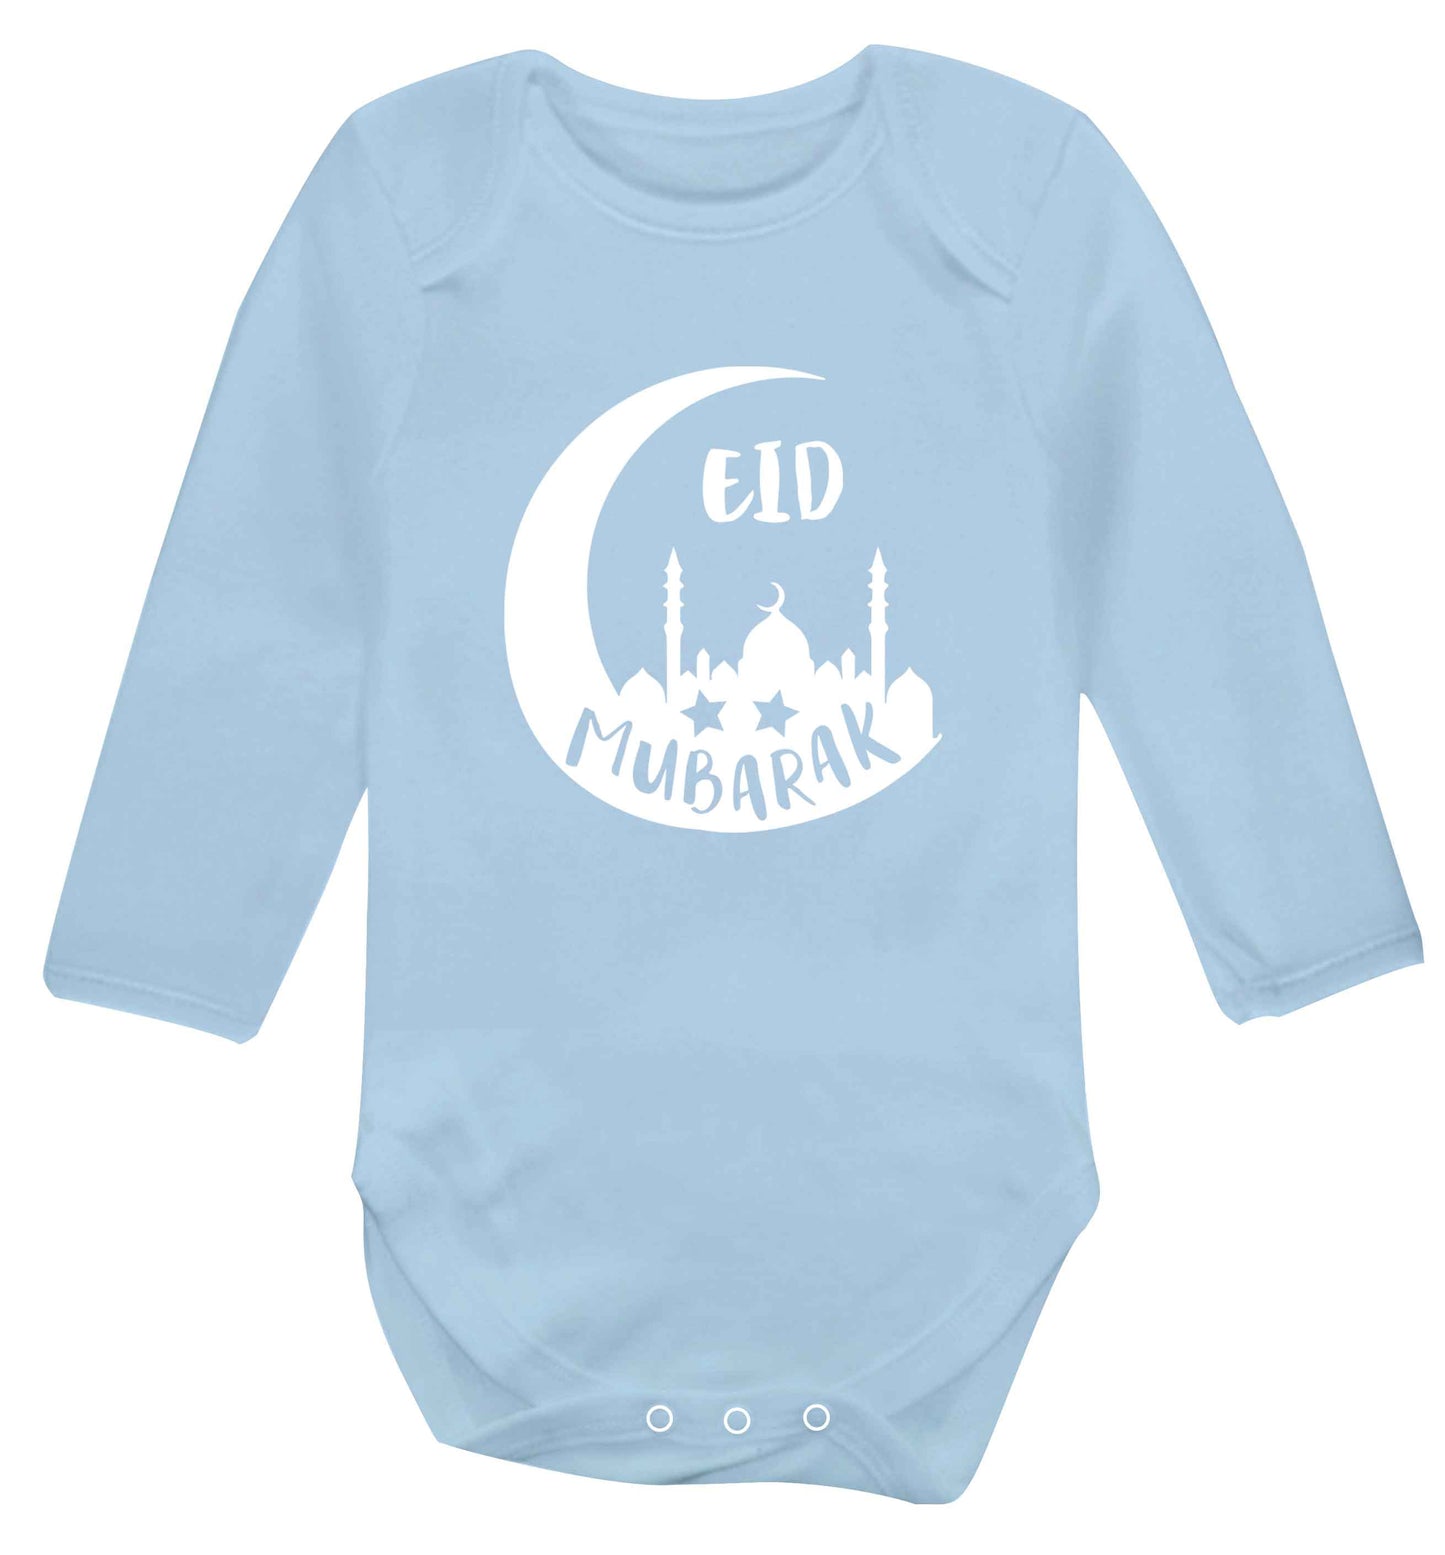 Eid mubarak baby vest long sleeved pale blue 6-12 months